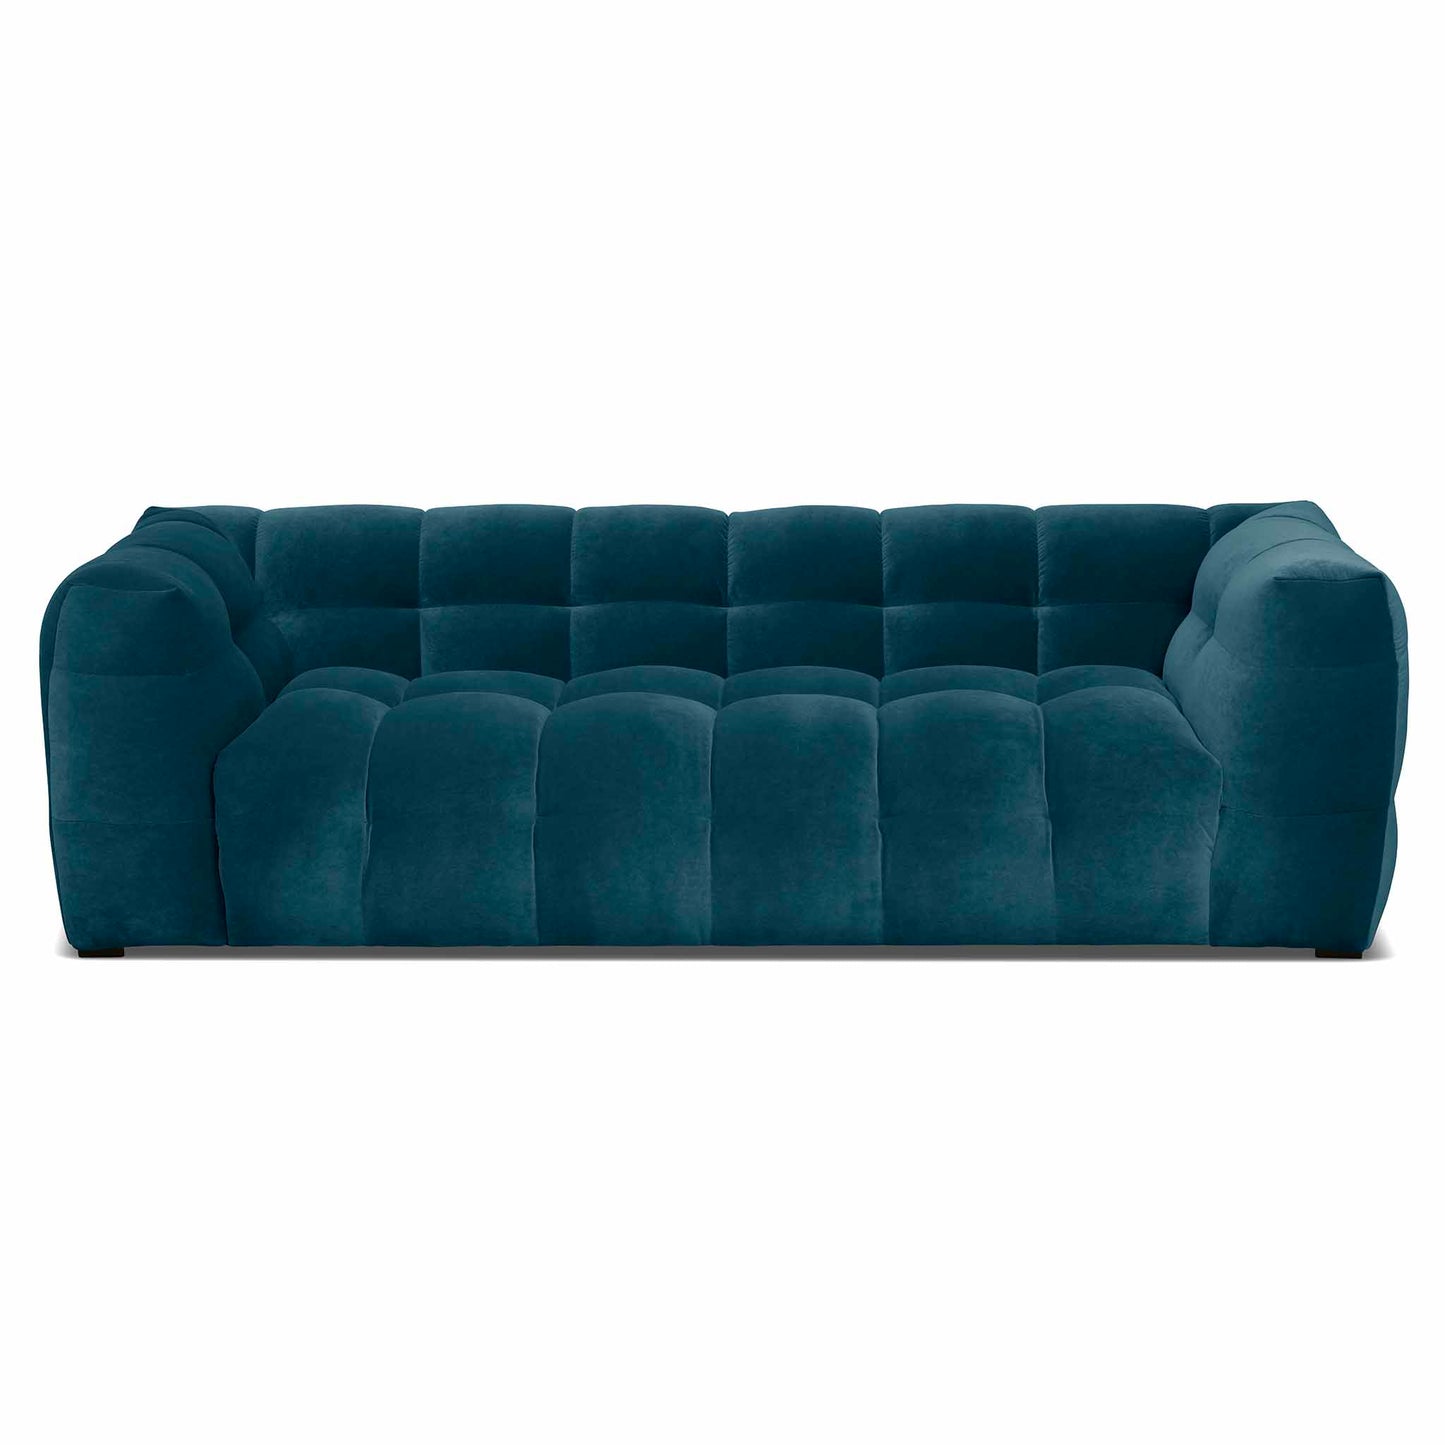 Caesar bubblig design soffa petroleumblå sammetssoffa